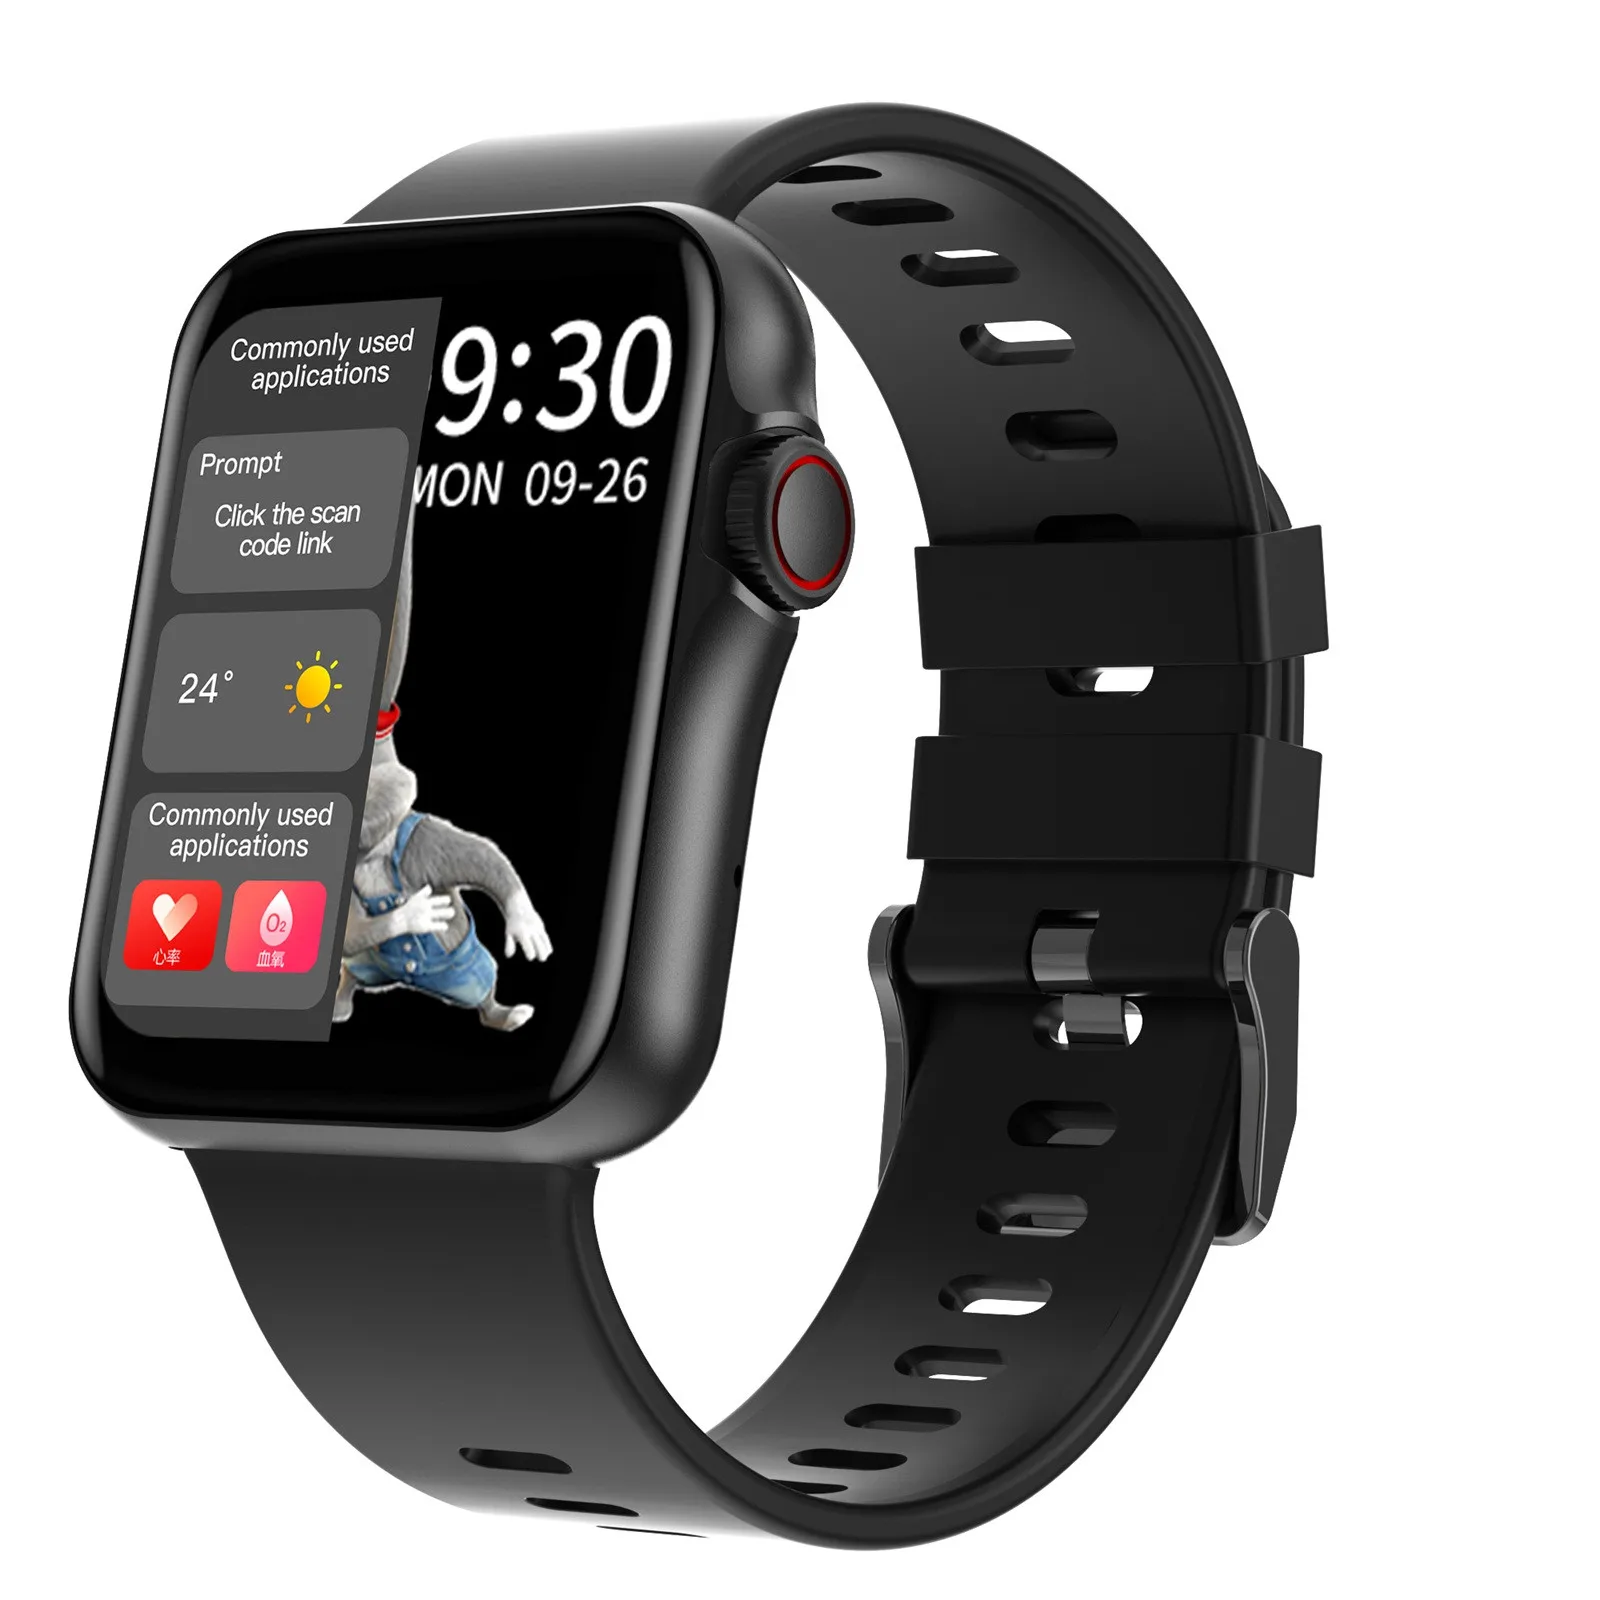 

D06 Sports Smart Watch 1.6 Inch Bluetooth Smartwatch Call Fitness Heart Rate Waterproof Fitness Activity Tracker Sport Watch